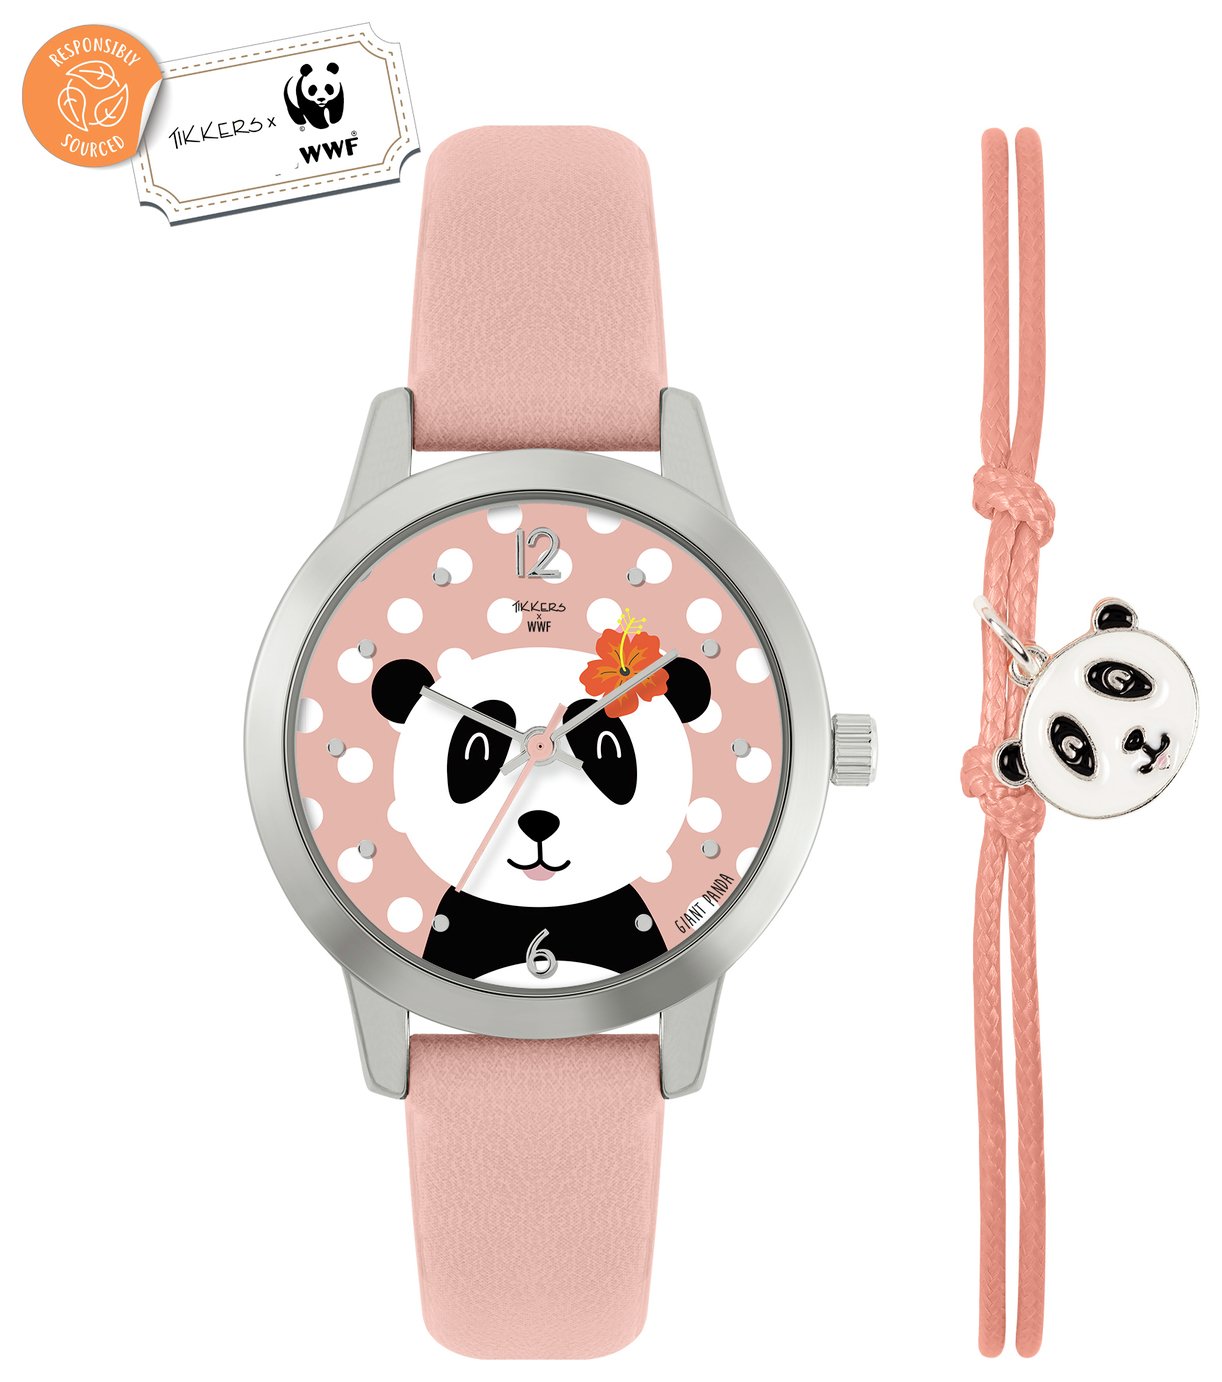 Tikkers x WWF Panda Dial Watch and Panda Charm Bracelet